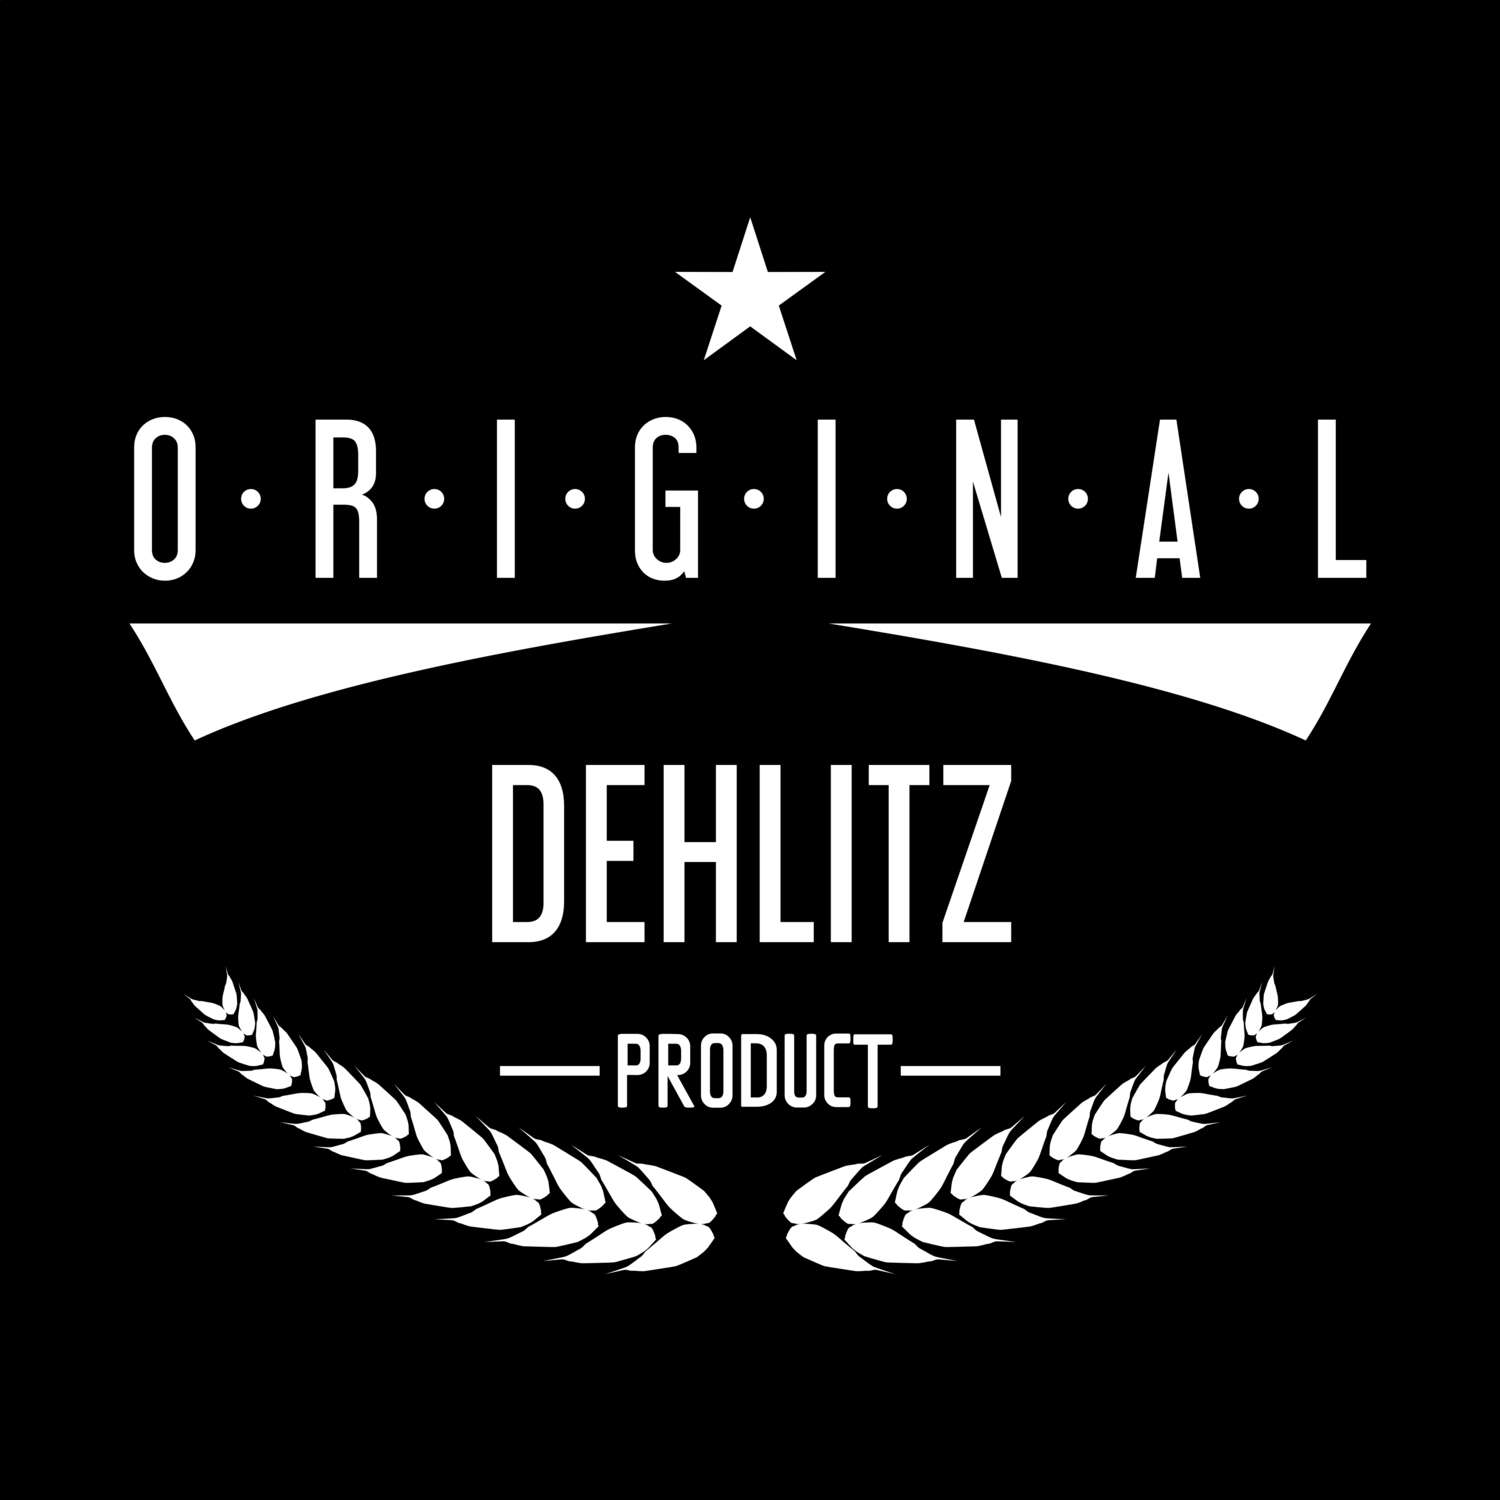 Dehlitz T-Shirt »Original Product«